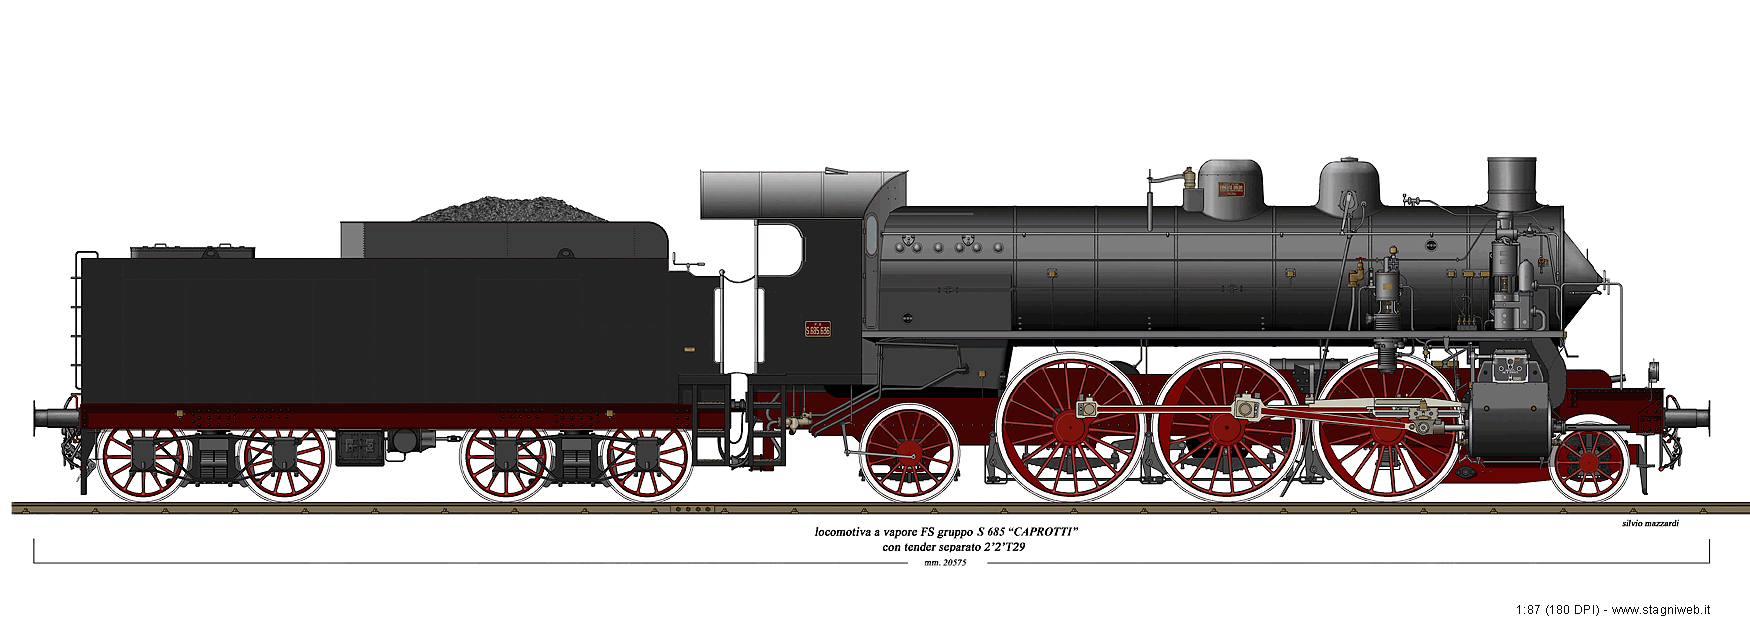 Locomotive a vapore - Gr. S 685